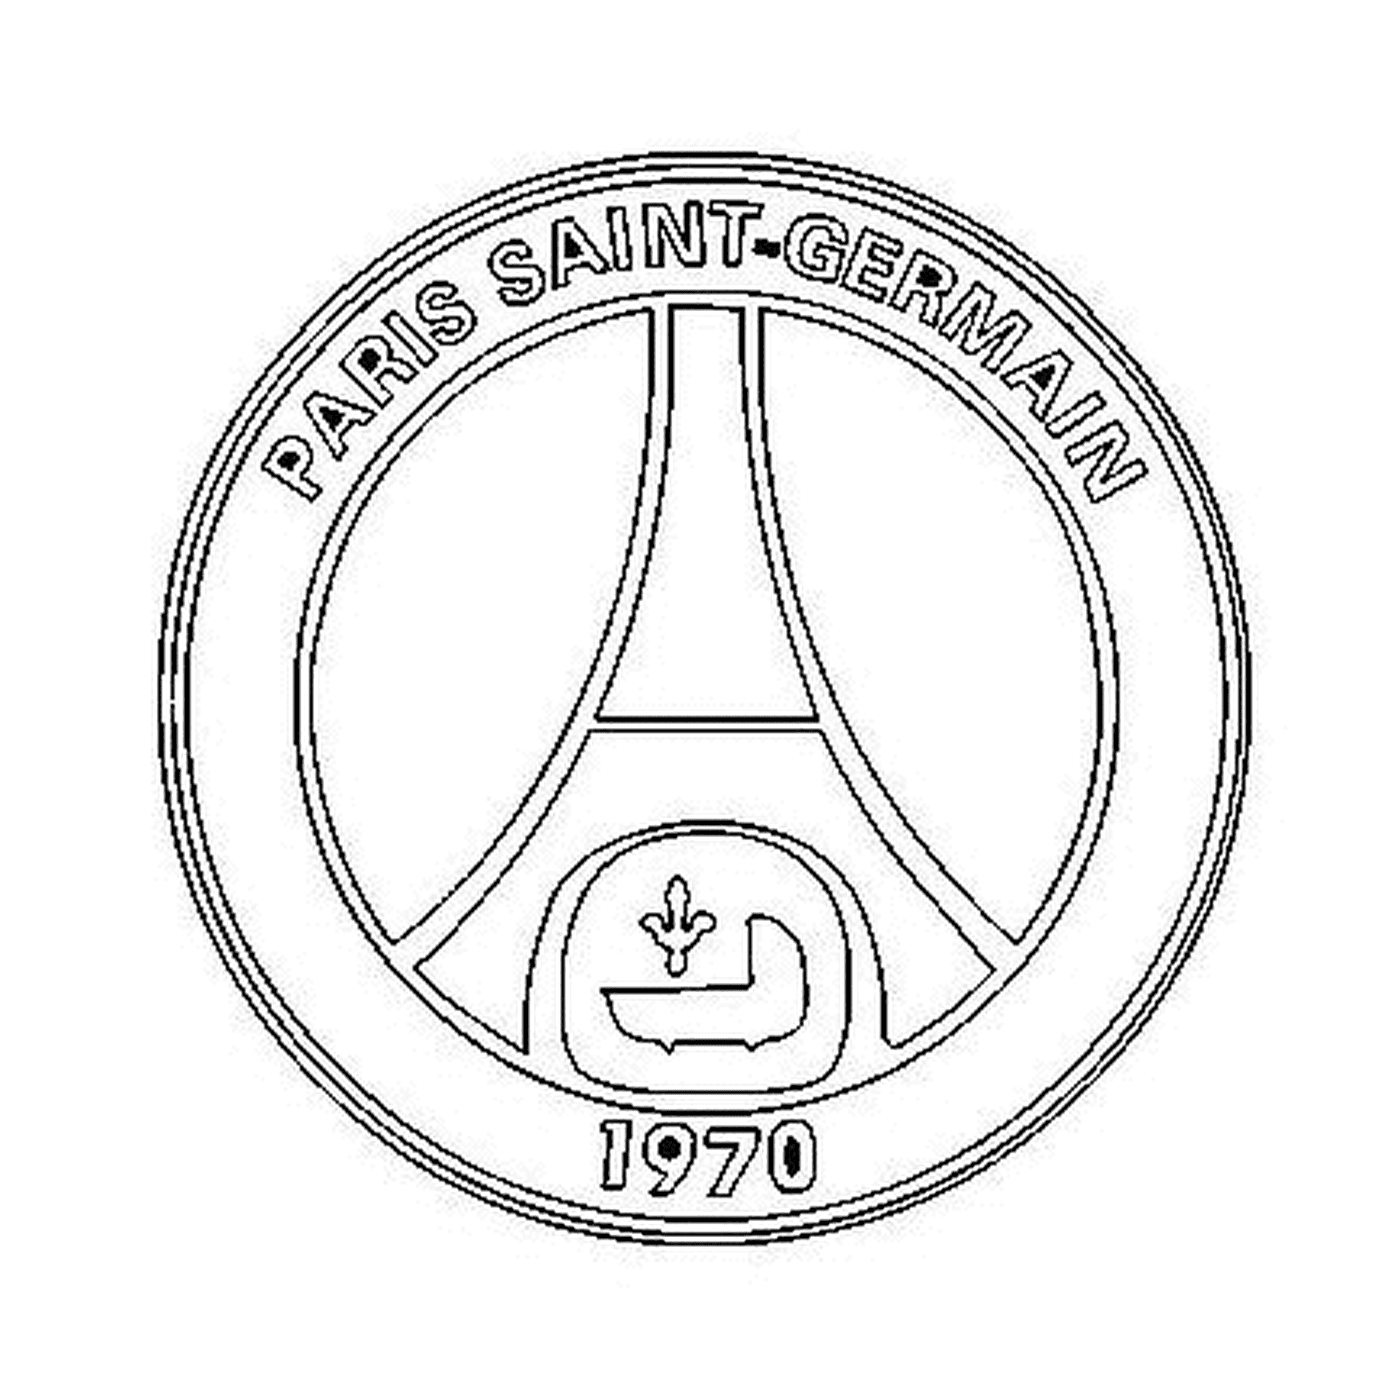  Logo de París Saint-Germain 